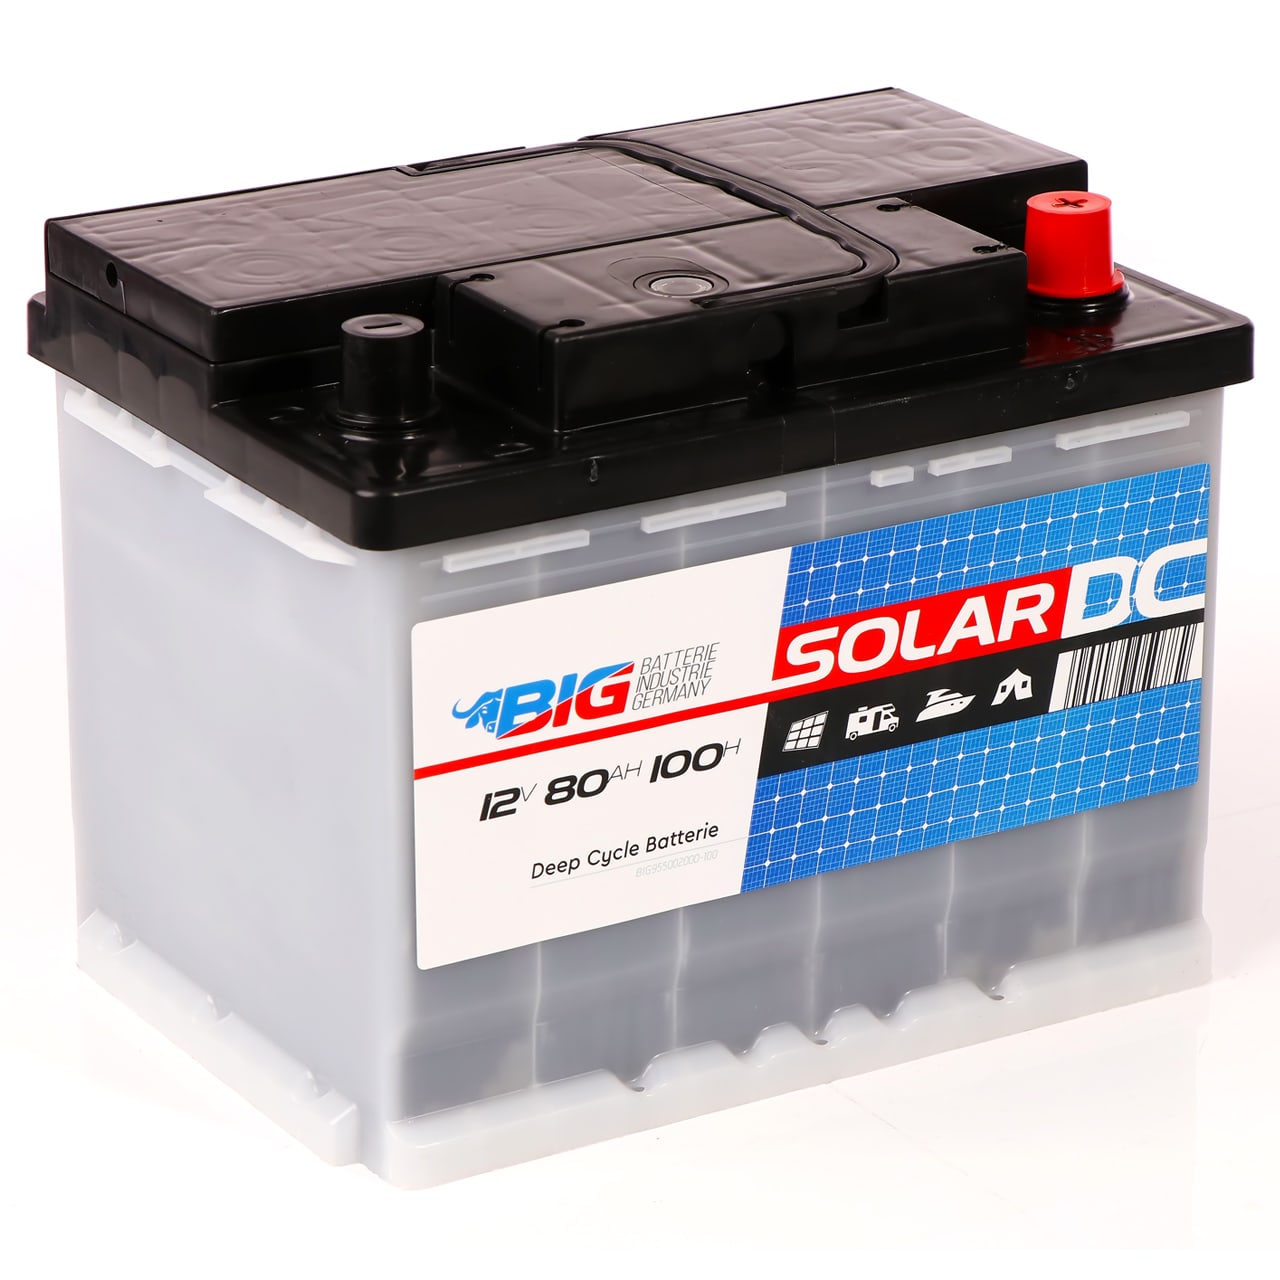 BIG Versorgungsbatterie 80Ah 12V Solar-Batterie 95502